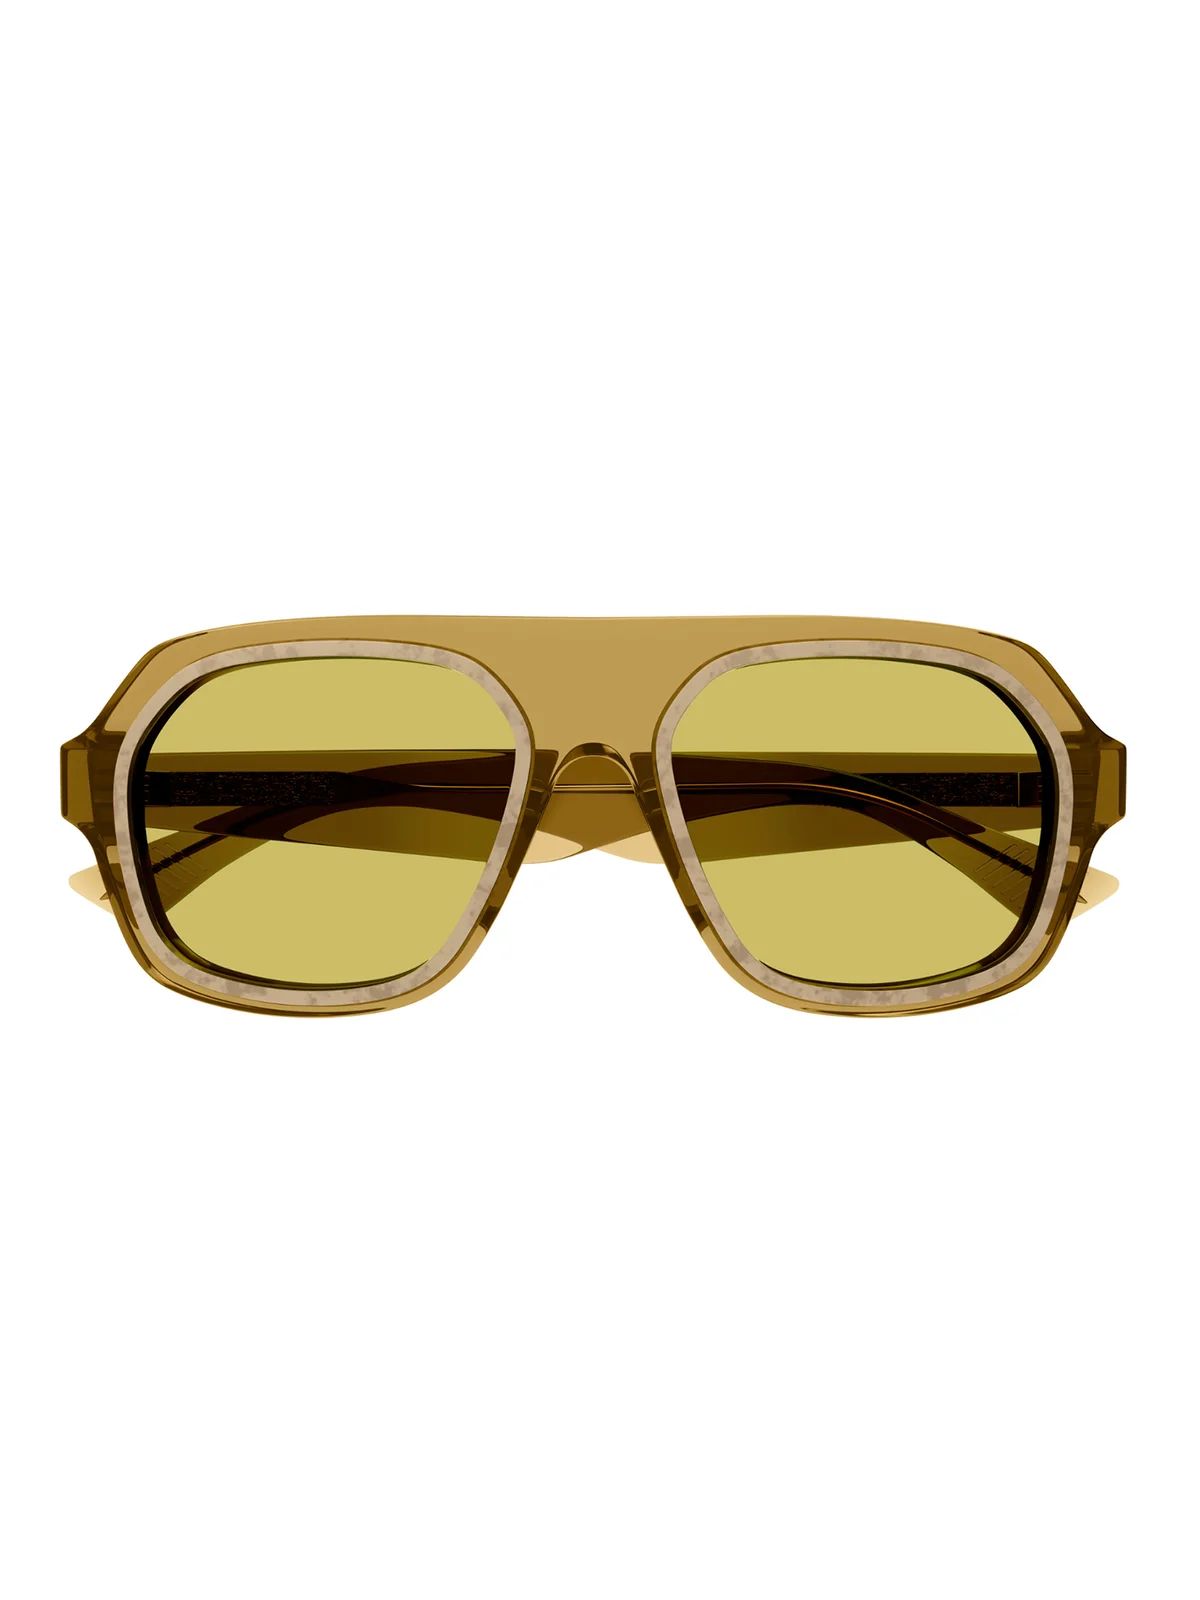 Bottega Veneta Eyewear Aviator Frame Sunglasses | Cettire Global